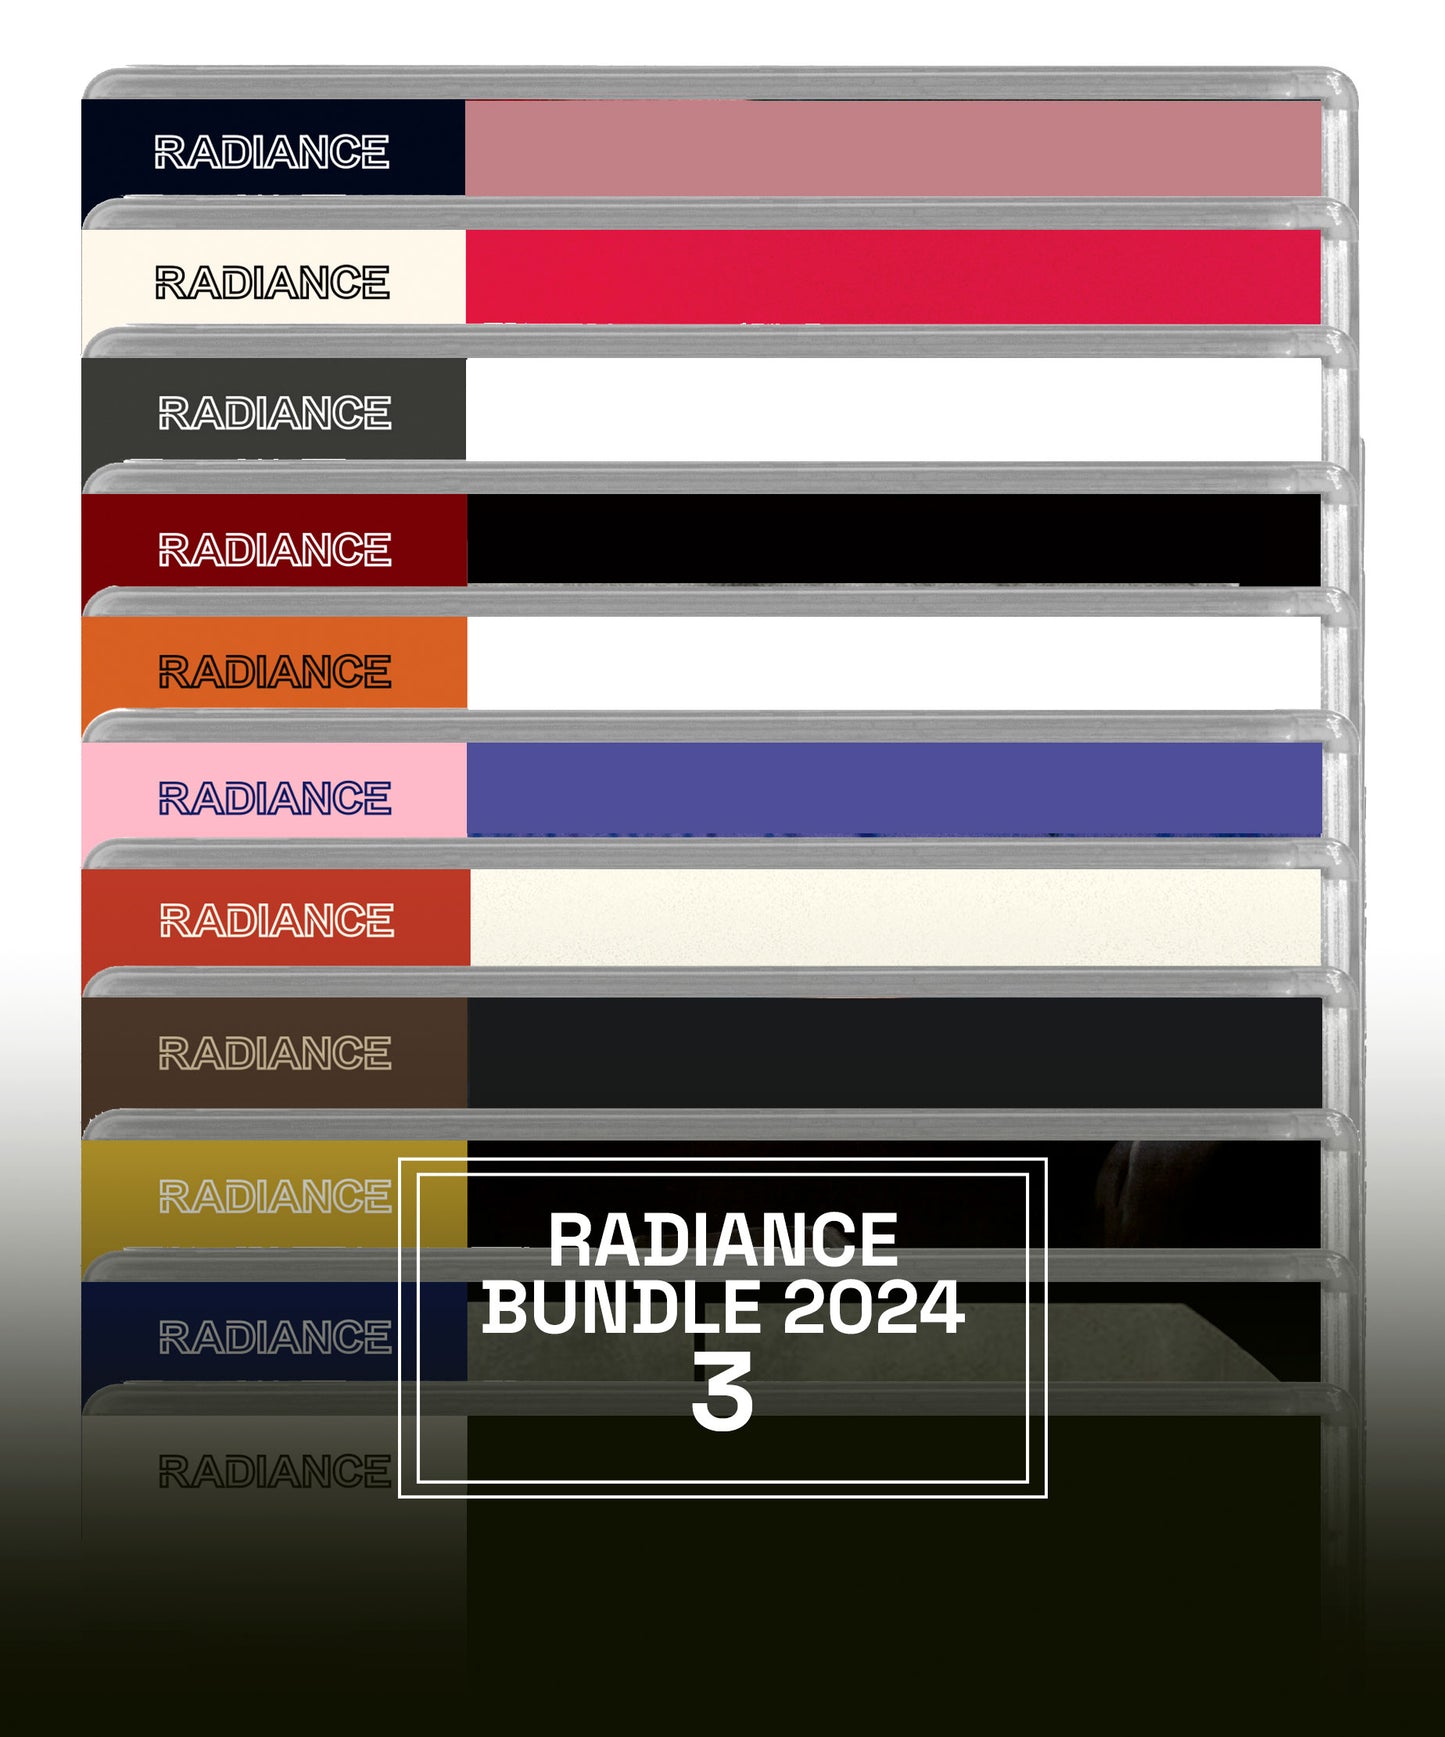 Radiance Limited Edition 2024 Bundle (3/12)